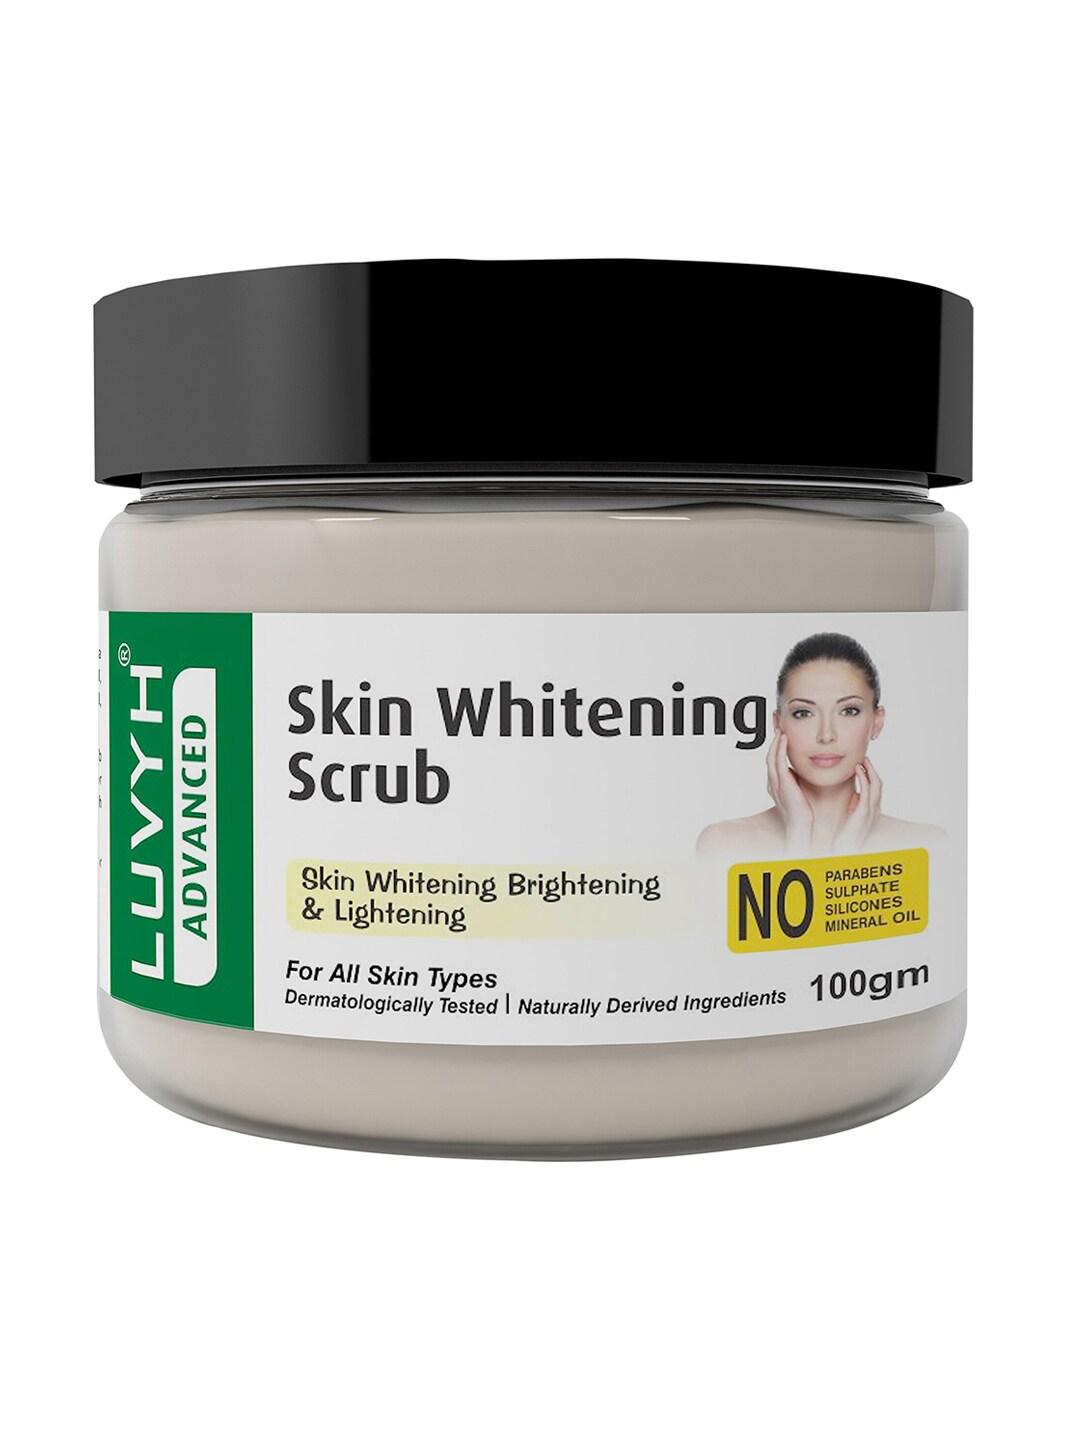 LUVYH Advanced Skin Whitening Scrub for All Skin Types - 100 g